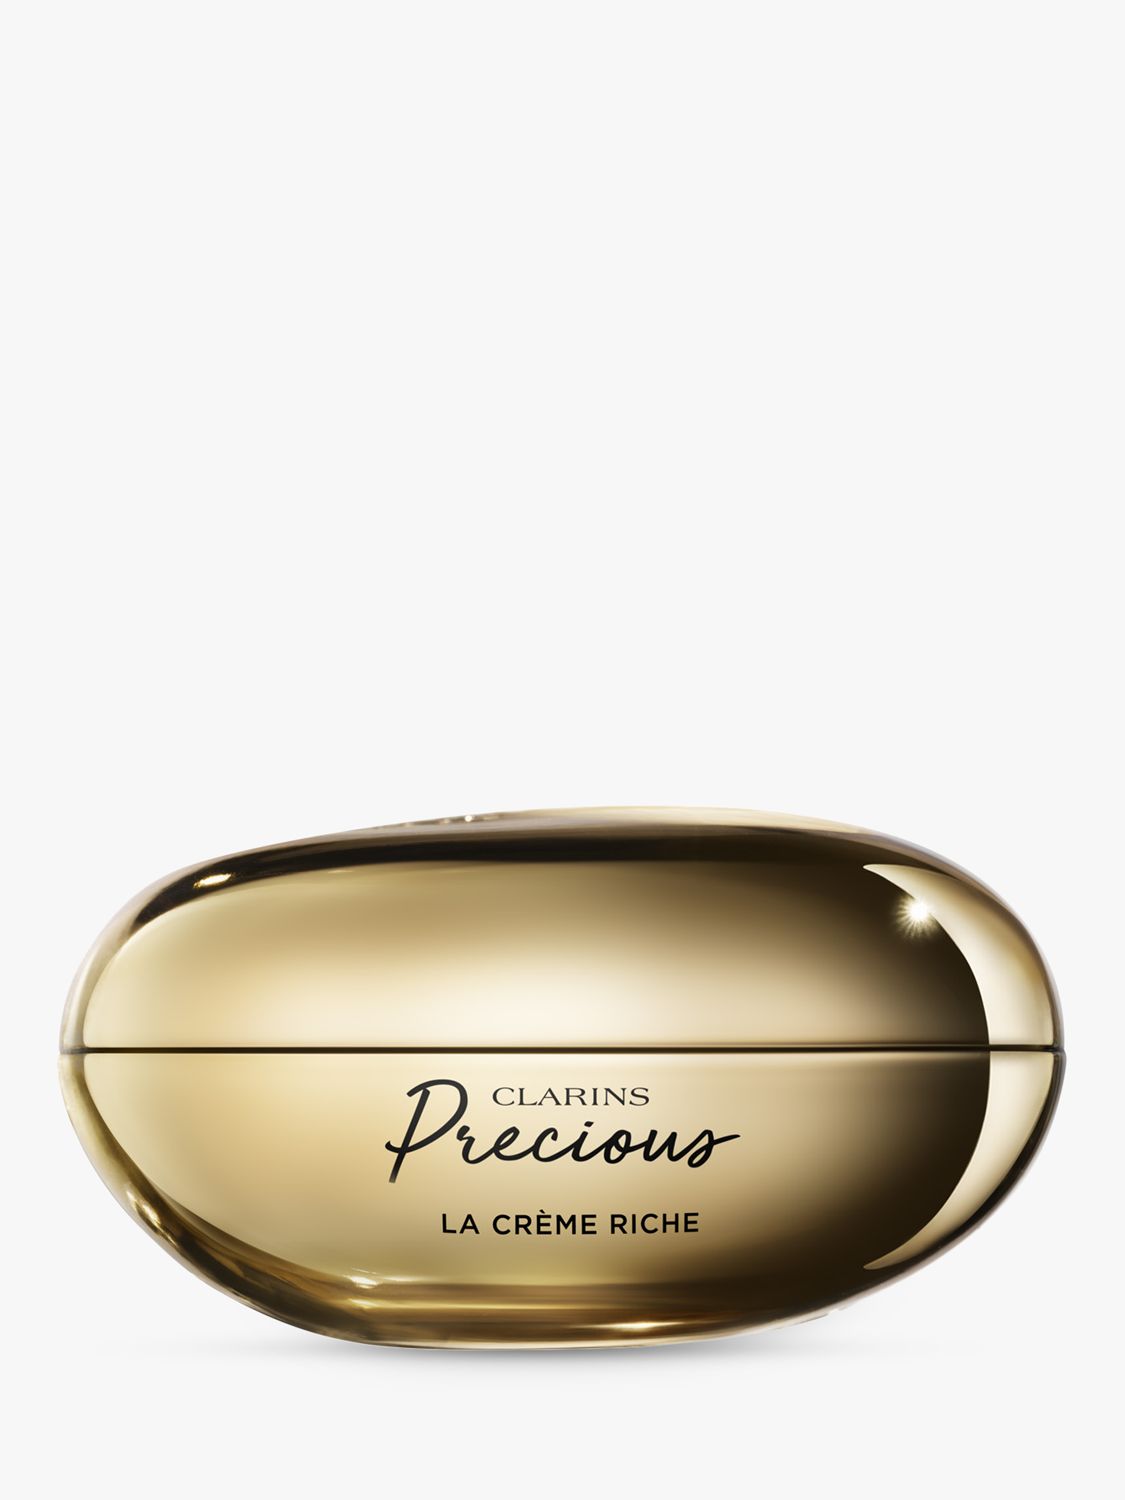 Clarins Precious La Crème Riche Age-Defying Moisturiser, 50ml 1